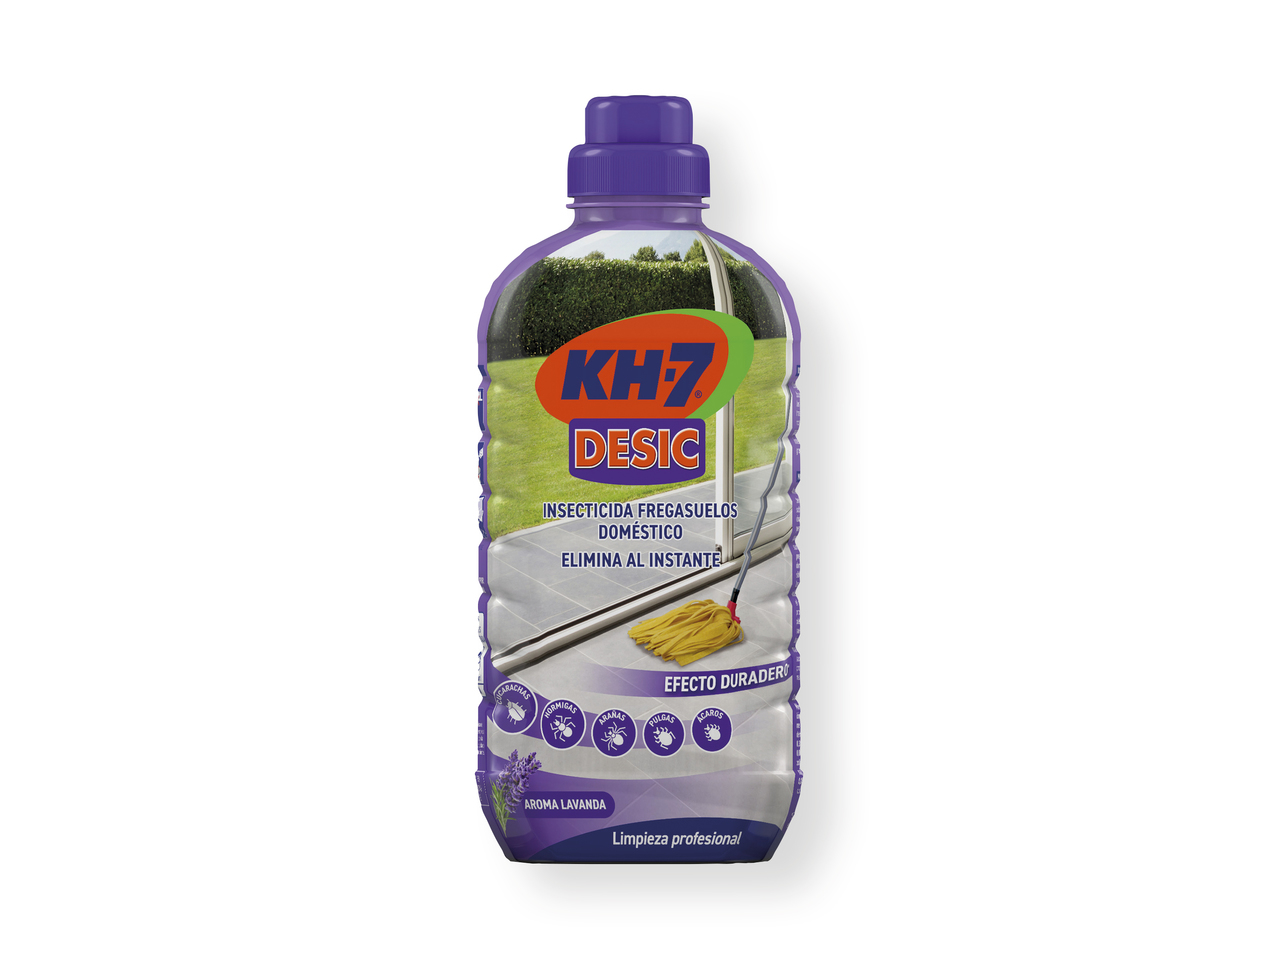 'KH-7(R)' DESIC Insecticida fregasuelos doméstico